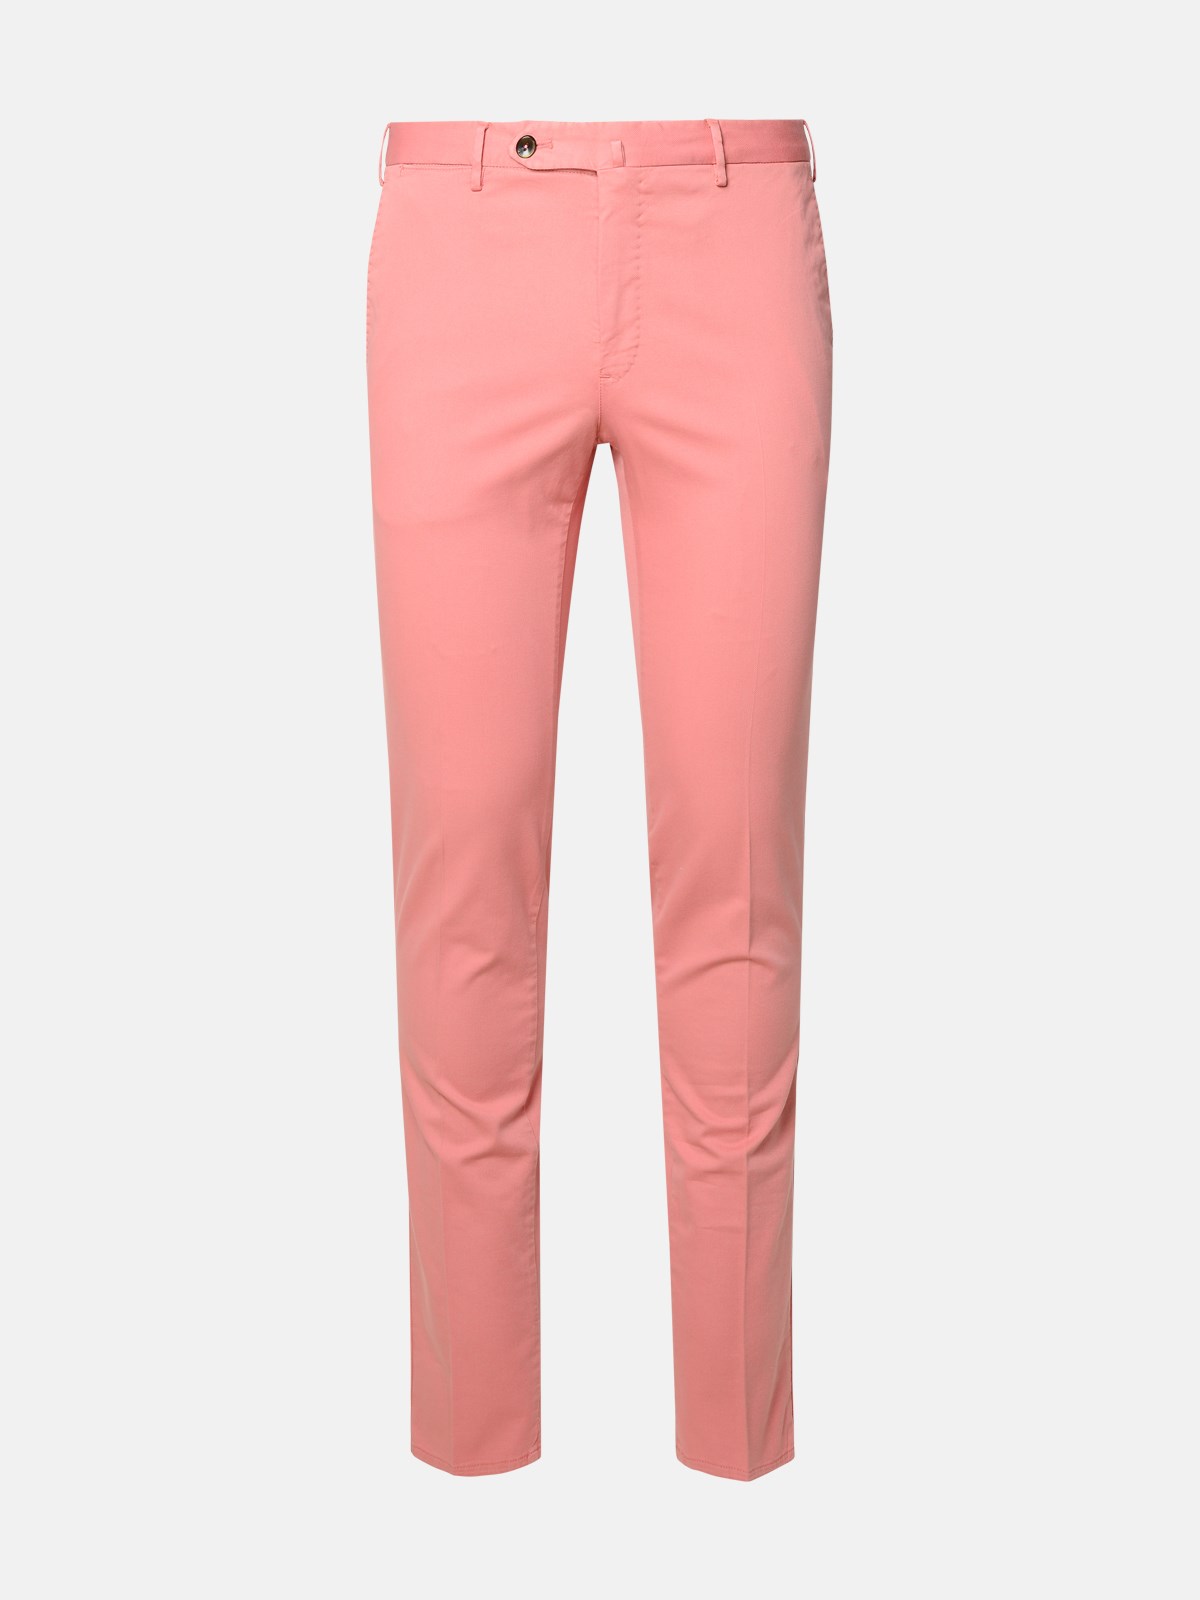 Shop Pt Torino 'superslim' Pink Cotton Blend Trousers